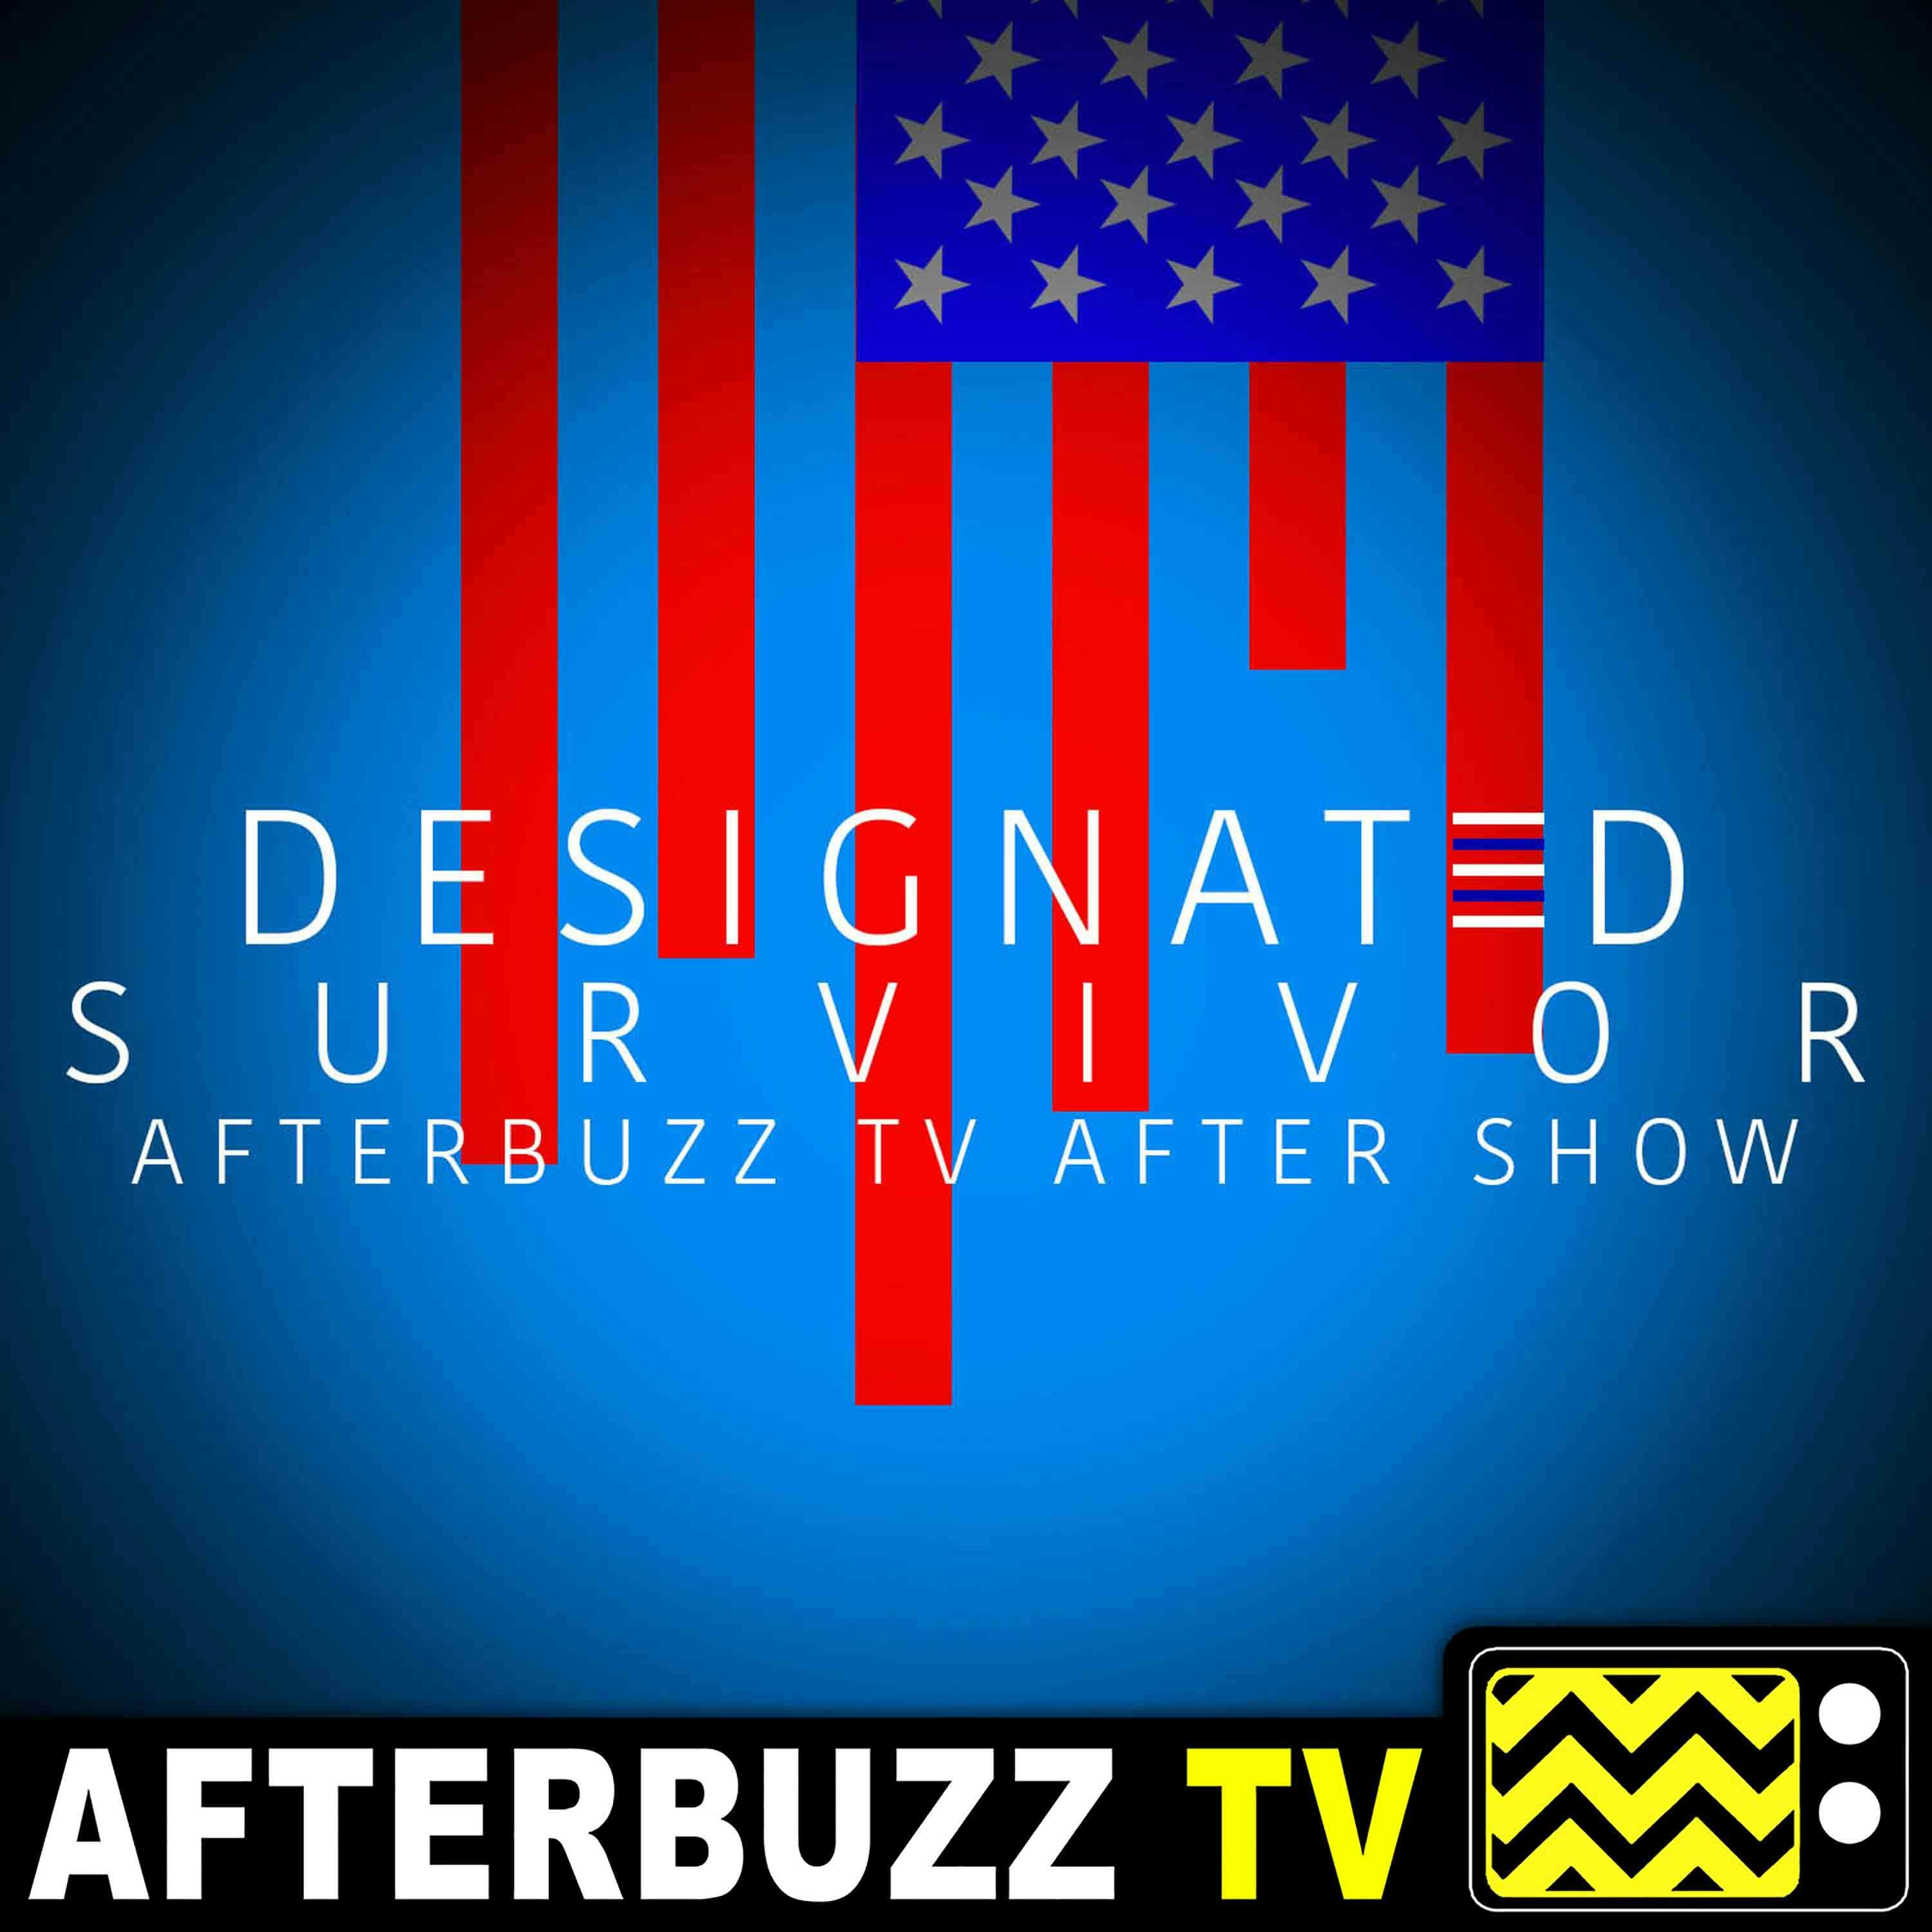 Designated Survivor S:1 | Bombshell E:20 | AfterBuzz TV AfterShow